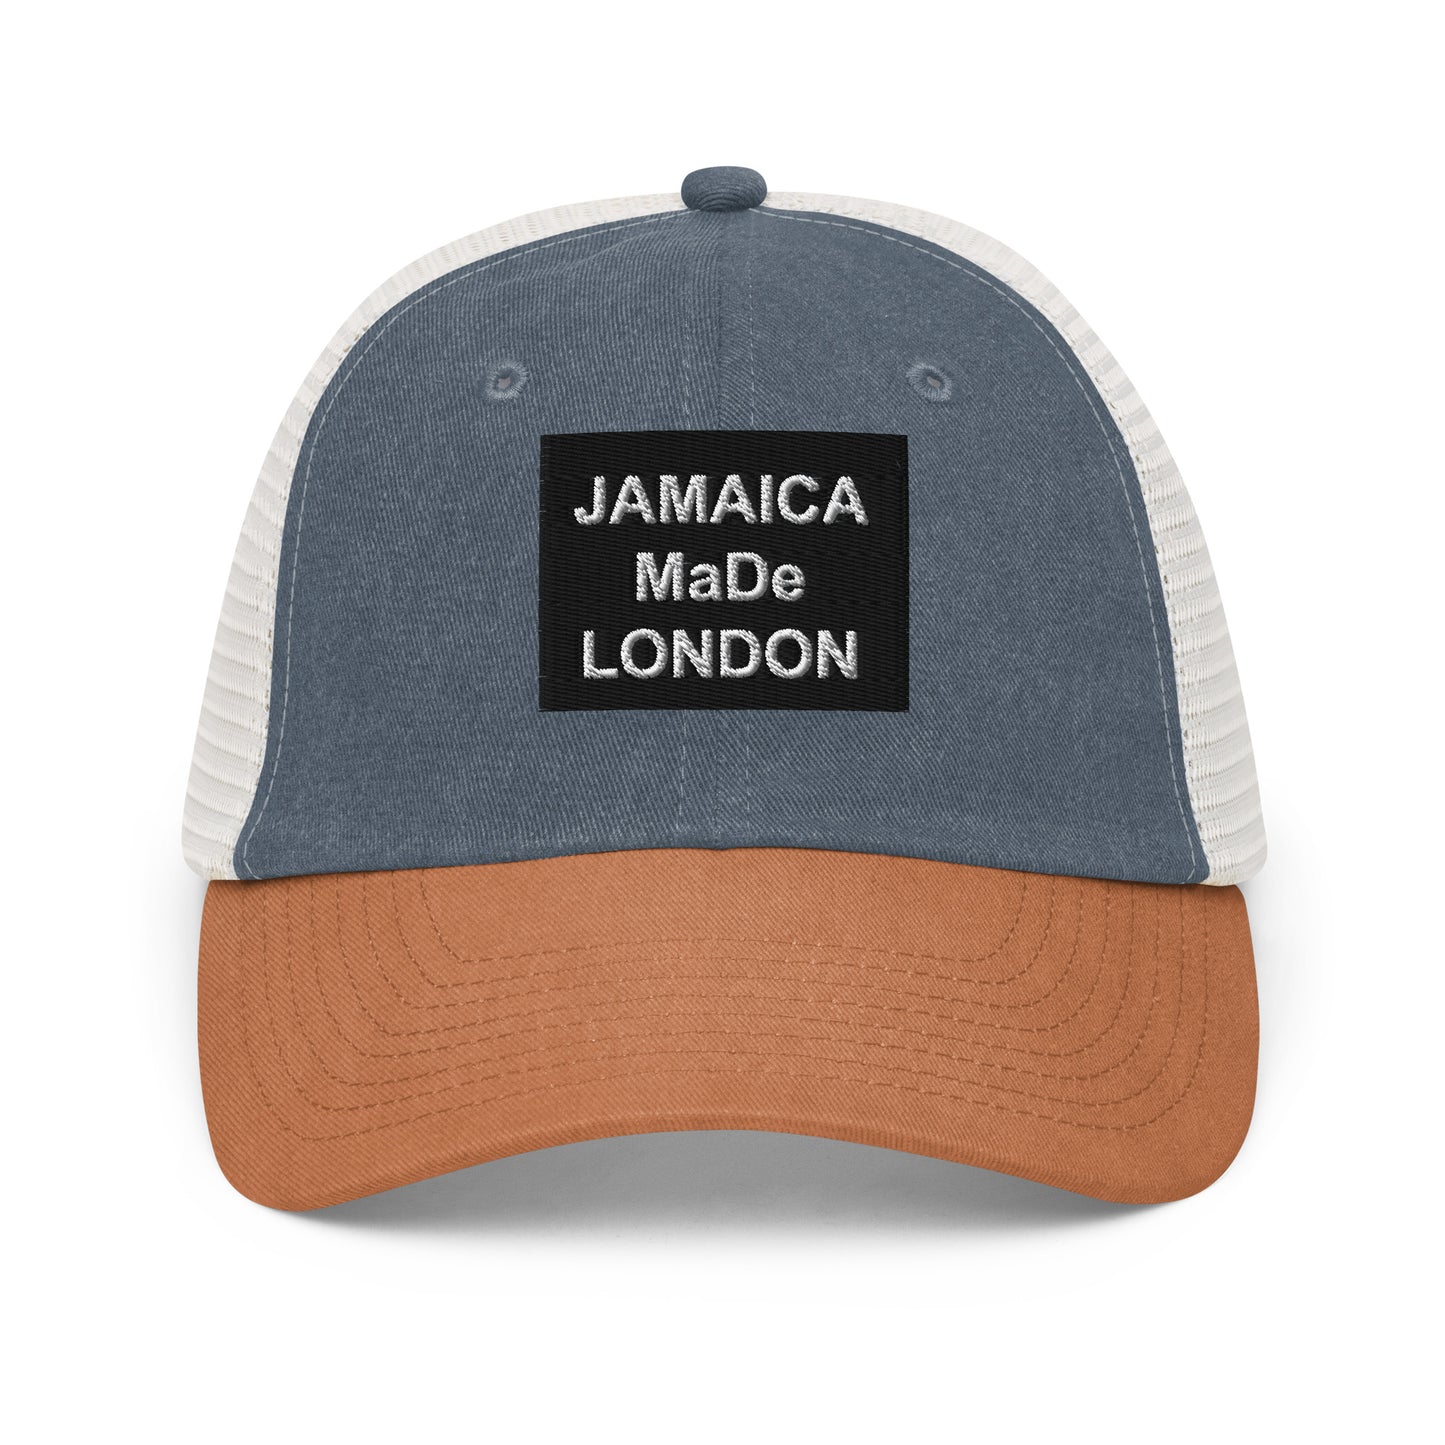 Jamaica Made London - dyed cap